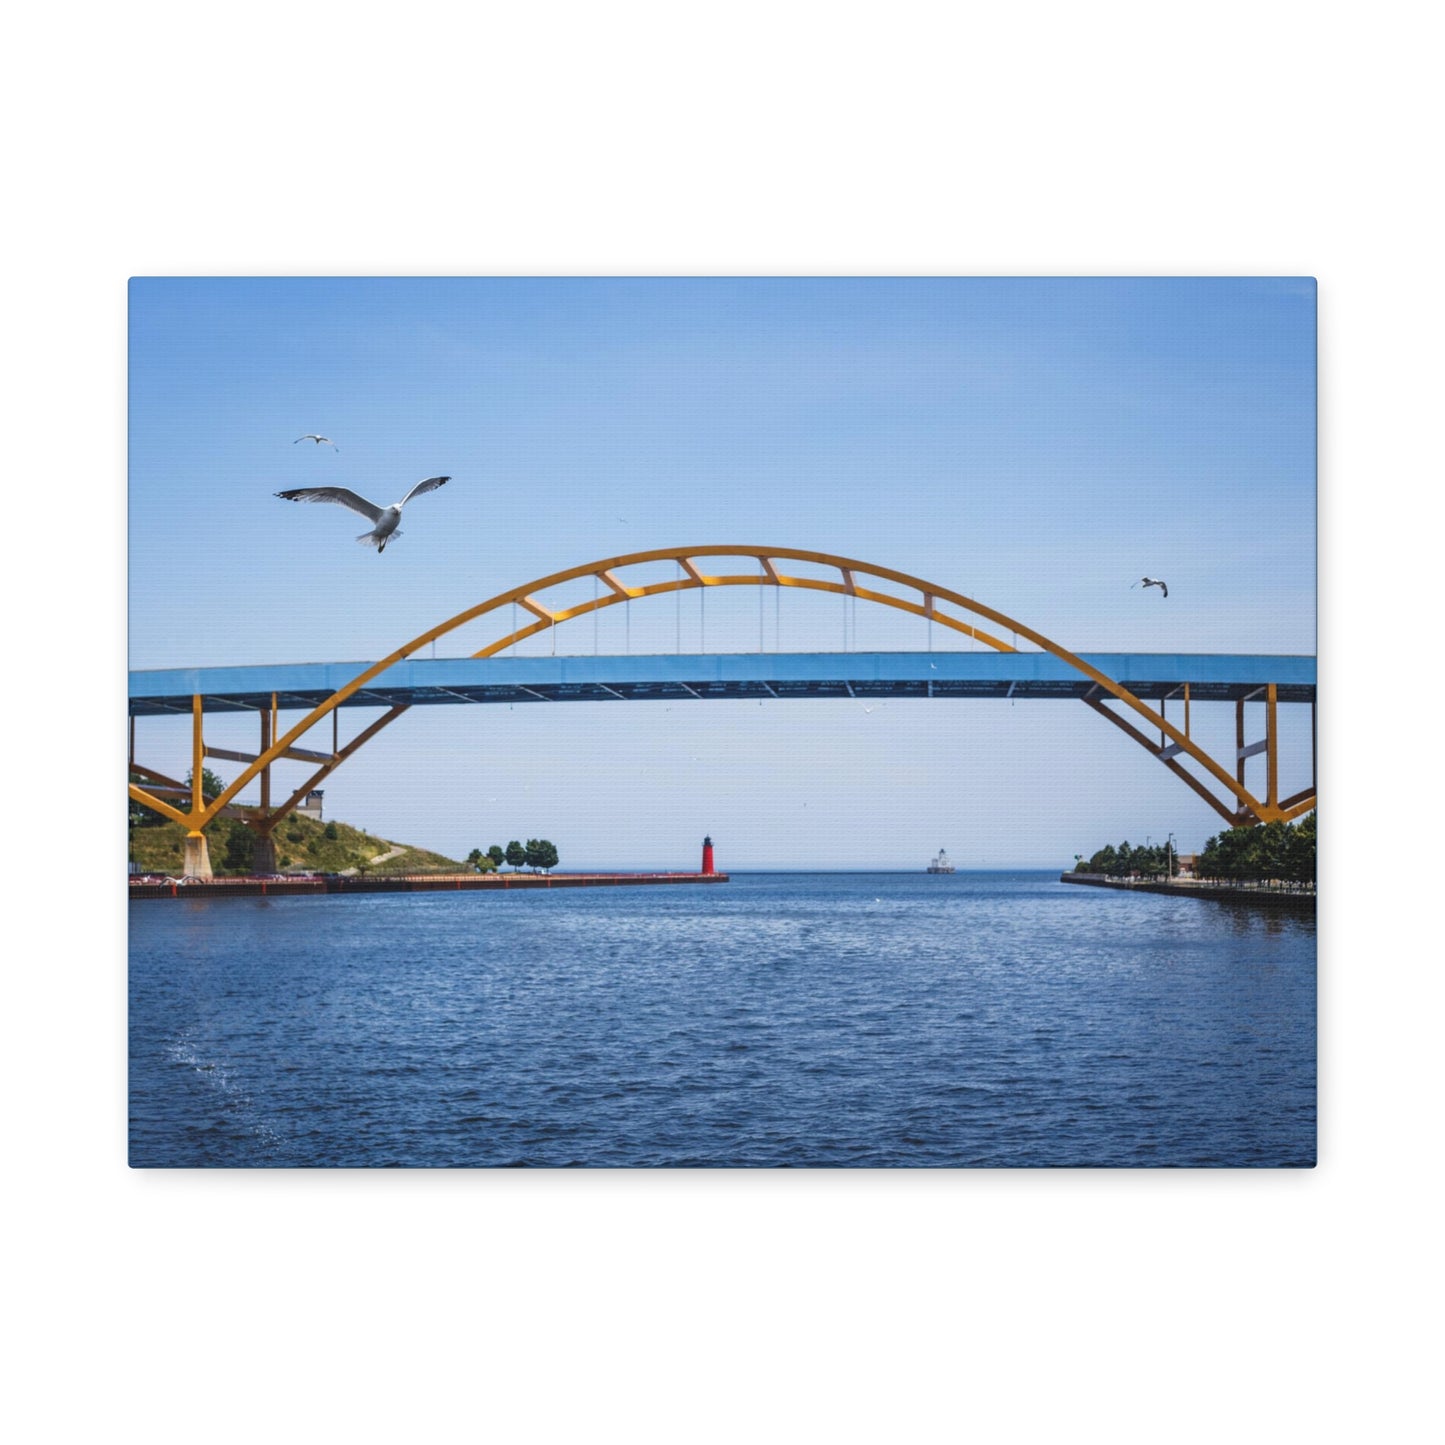 Milwaukee, Wisconsin’s Hoan Bridge and Seagulls, Photography Canvas Wrap Wall Art